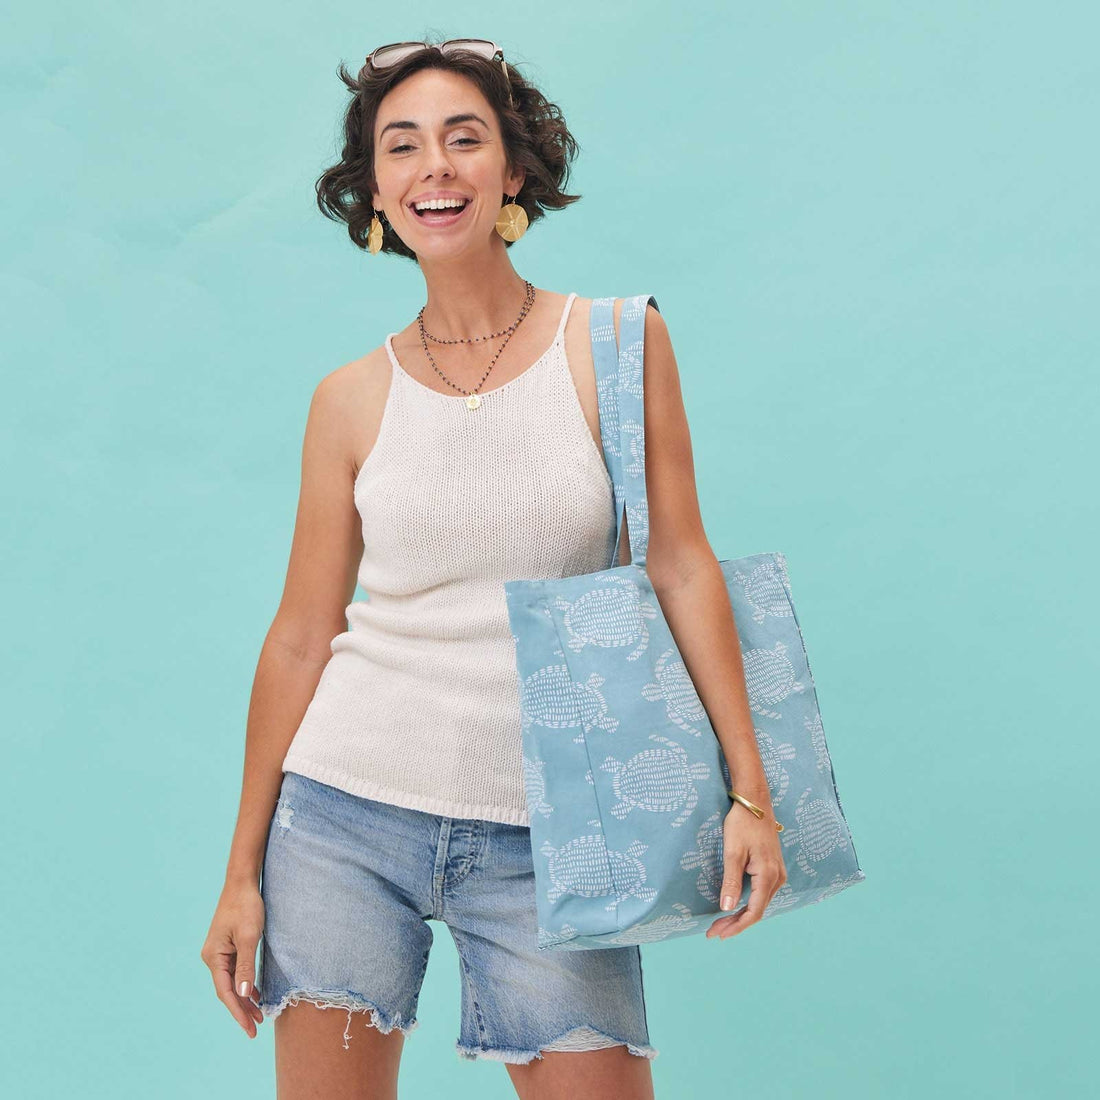 Sea Turtle Little Shopper Tote Bag Tote - rockflowerpaper